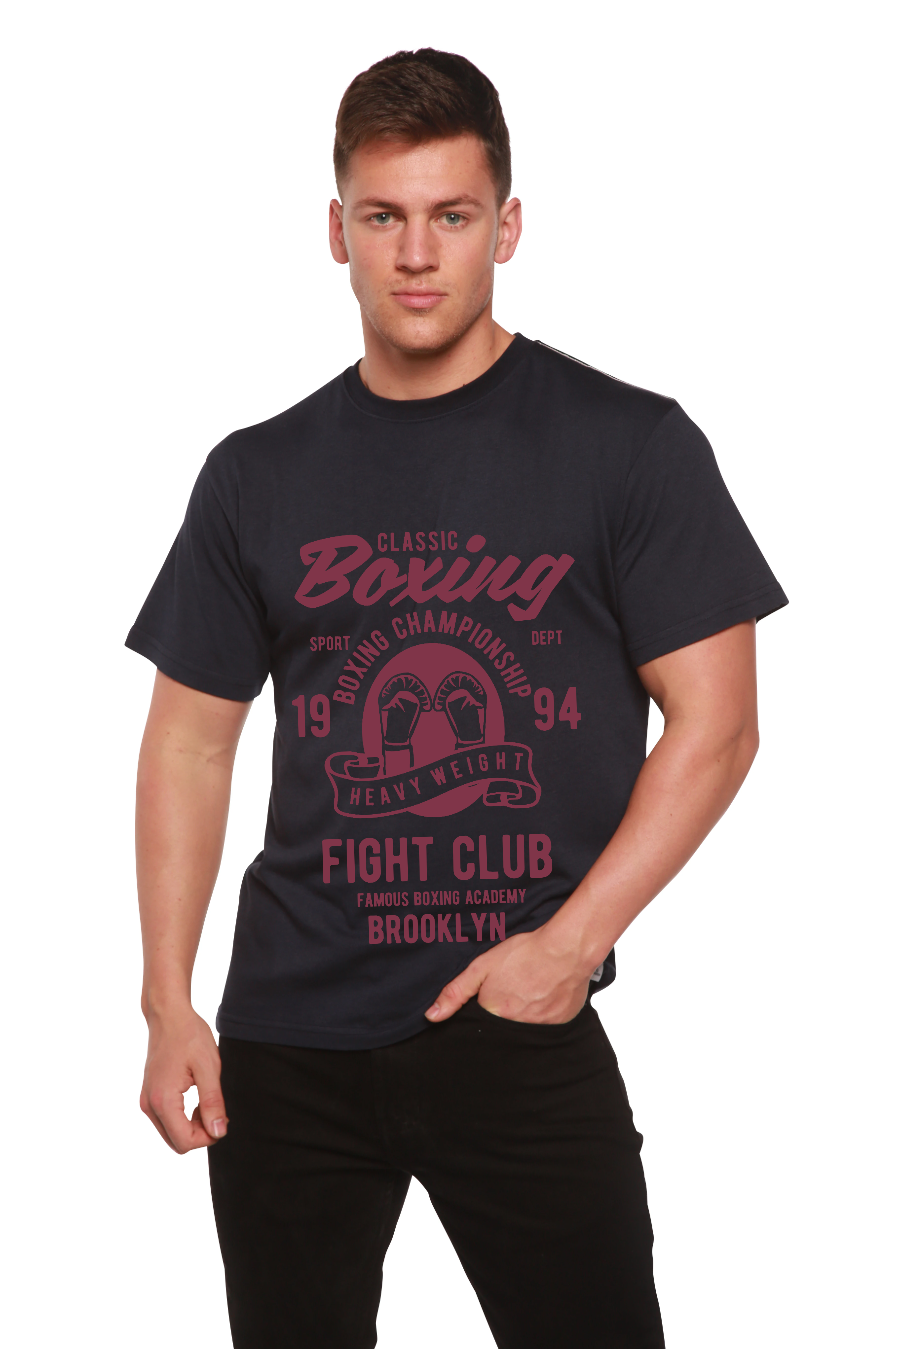 Classic Boxing Men's Bamboo Viscose/Organic Cotton Short Sleeve T-Shirt - Spun Bamboo